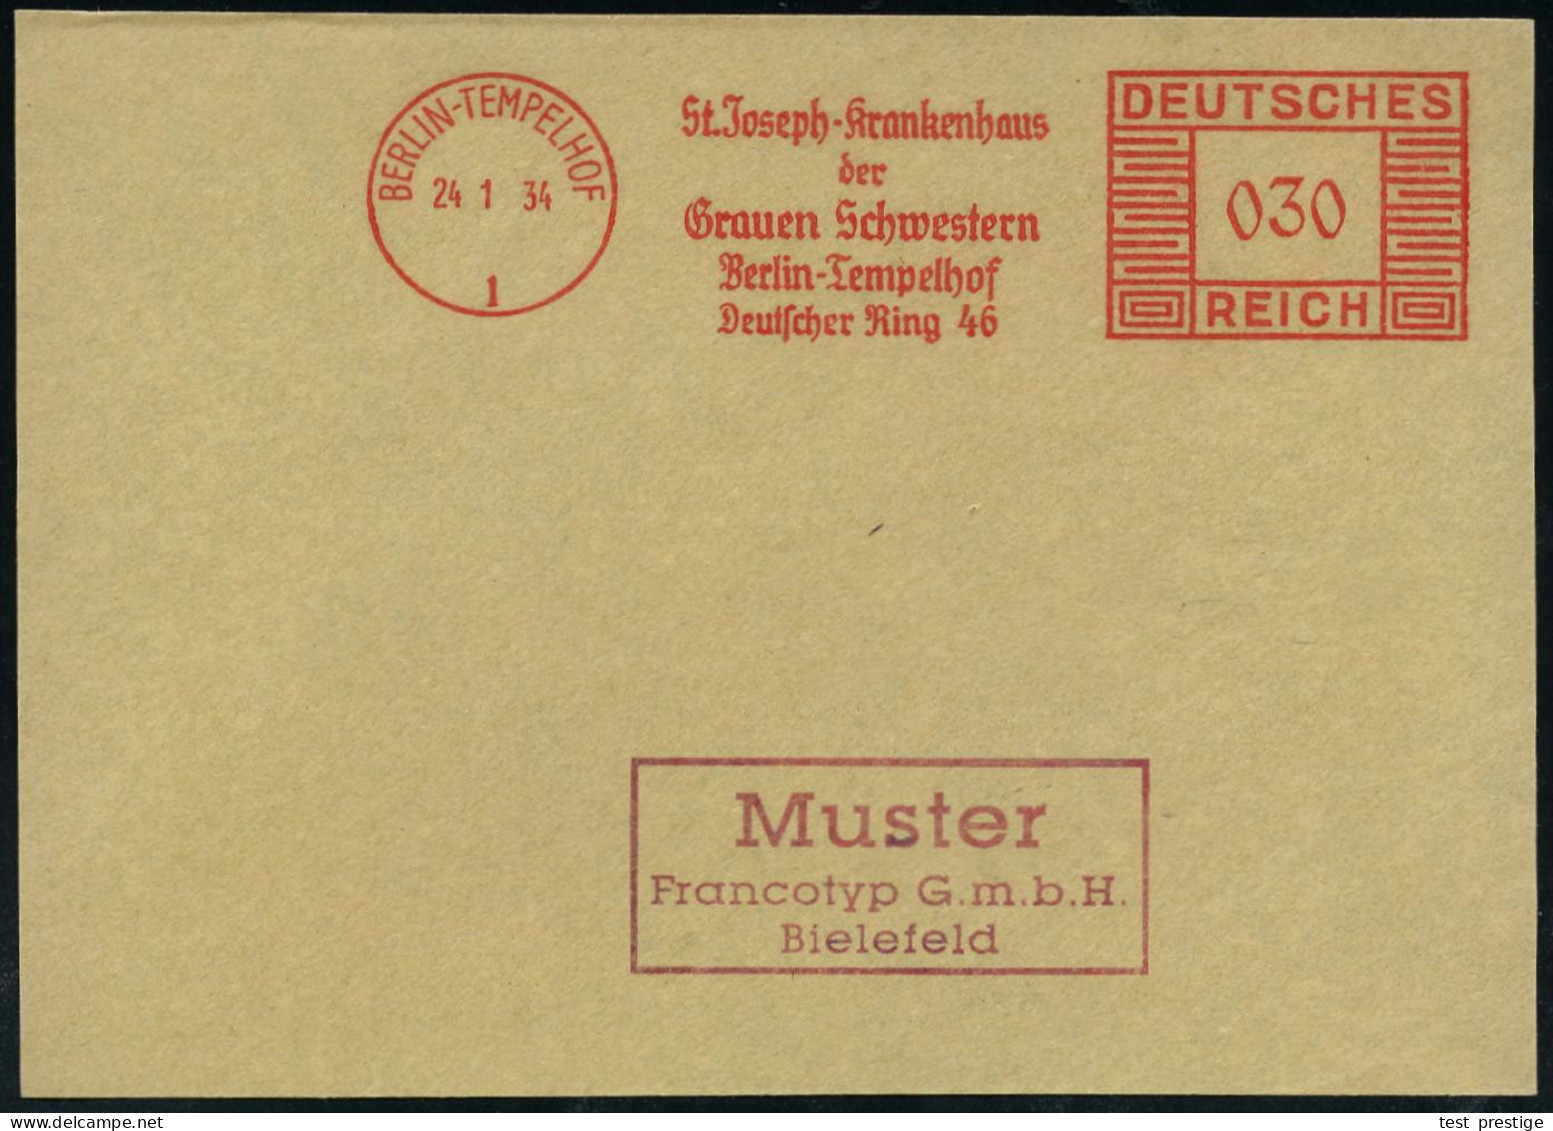 BERLIN-TEMPELHOF/ 1/ St.Joseph-Krankenhaus/ Der/ Grauen Schwestern 1934 (24.1.) AFS-Musterabdruck Francotyp "Mäanderrech - Medizin